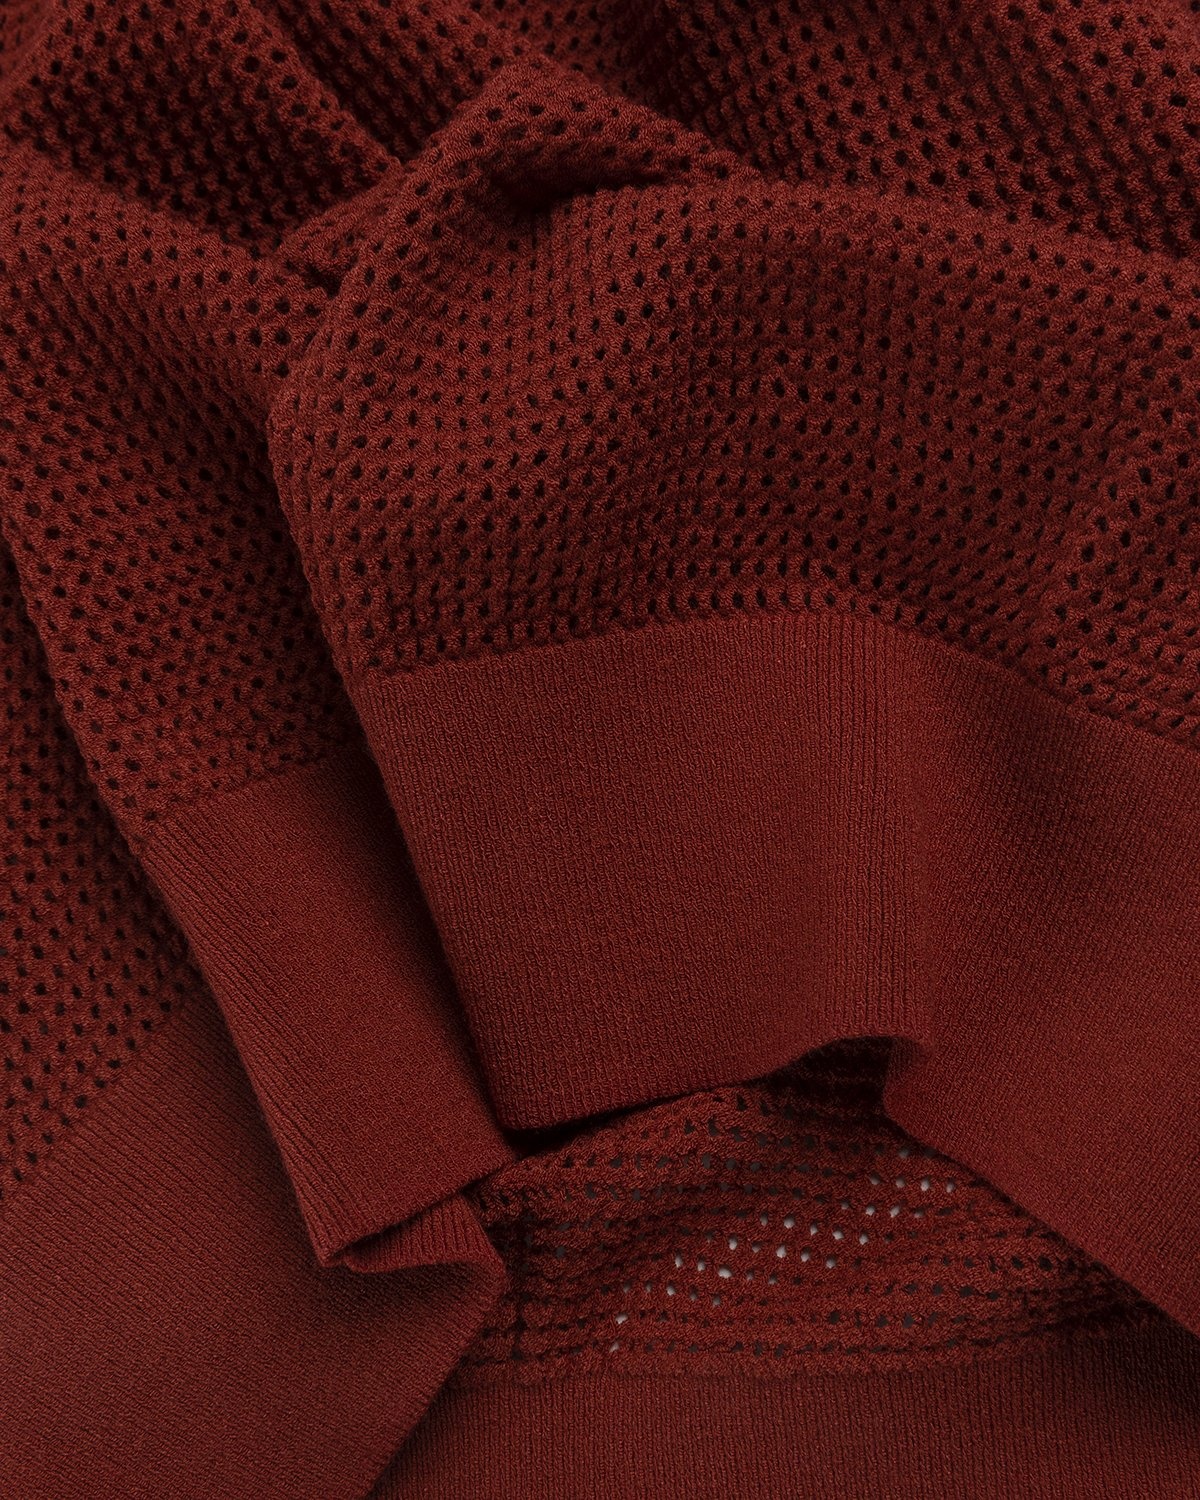 Dries van Noten – Jael Polo Shirt Brique - Polos - Red - Image 5